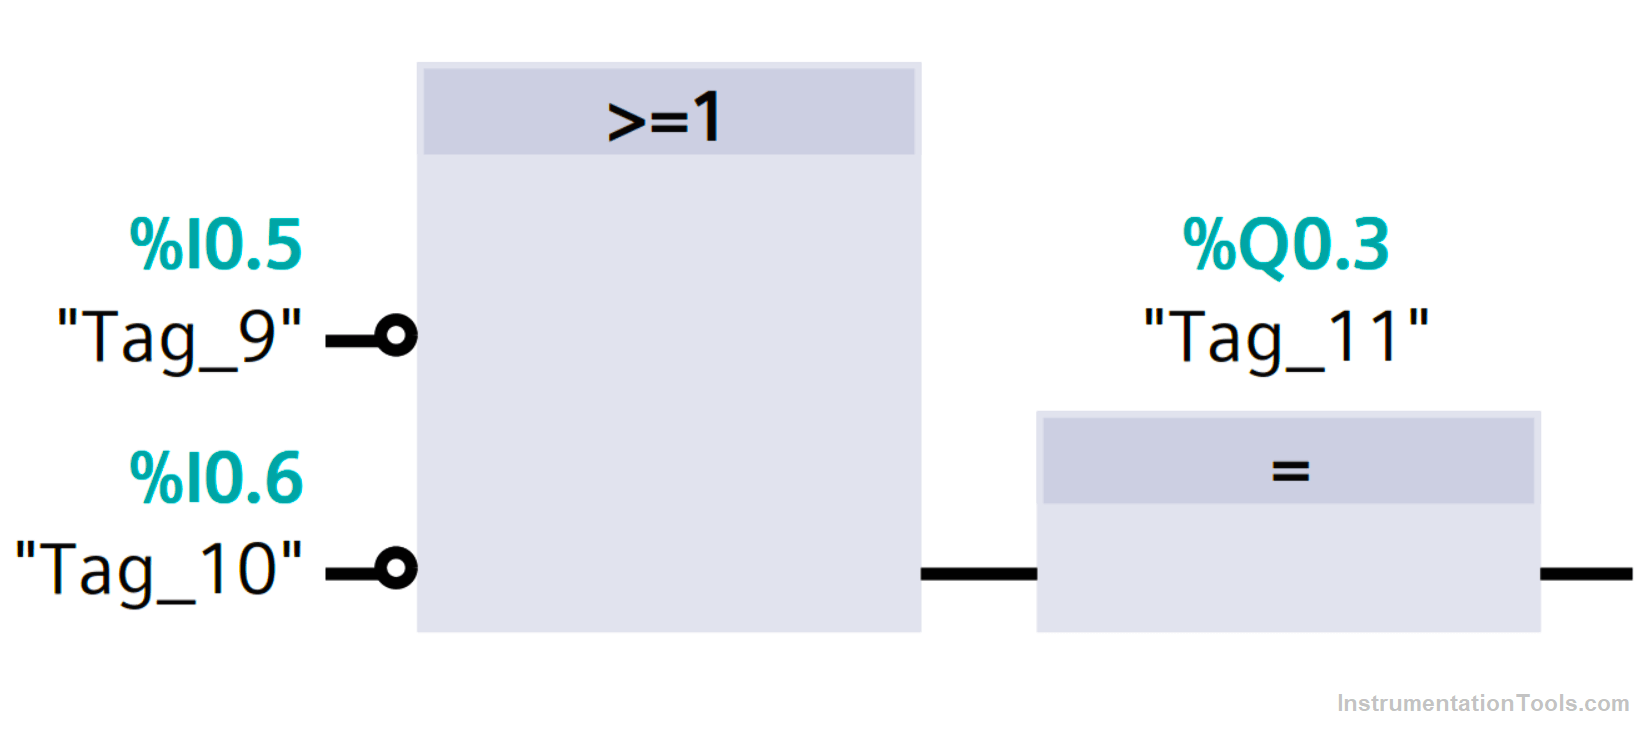 Functional Block Diagram of NAND Gate